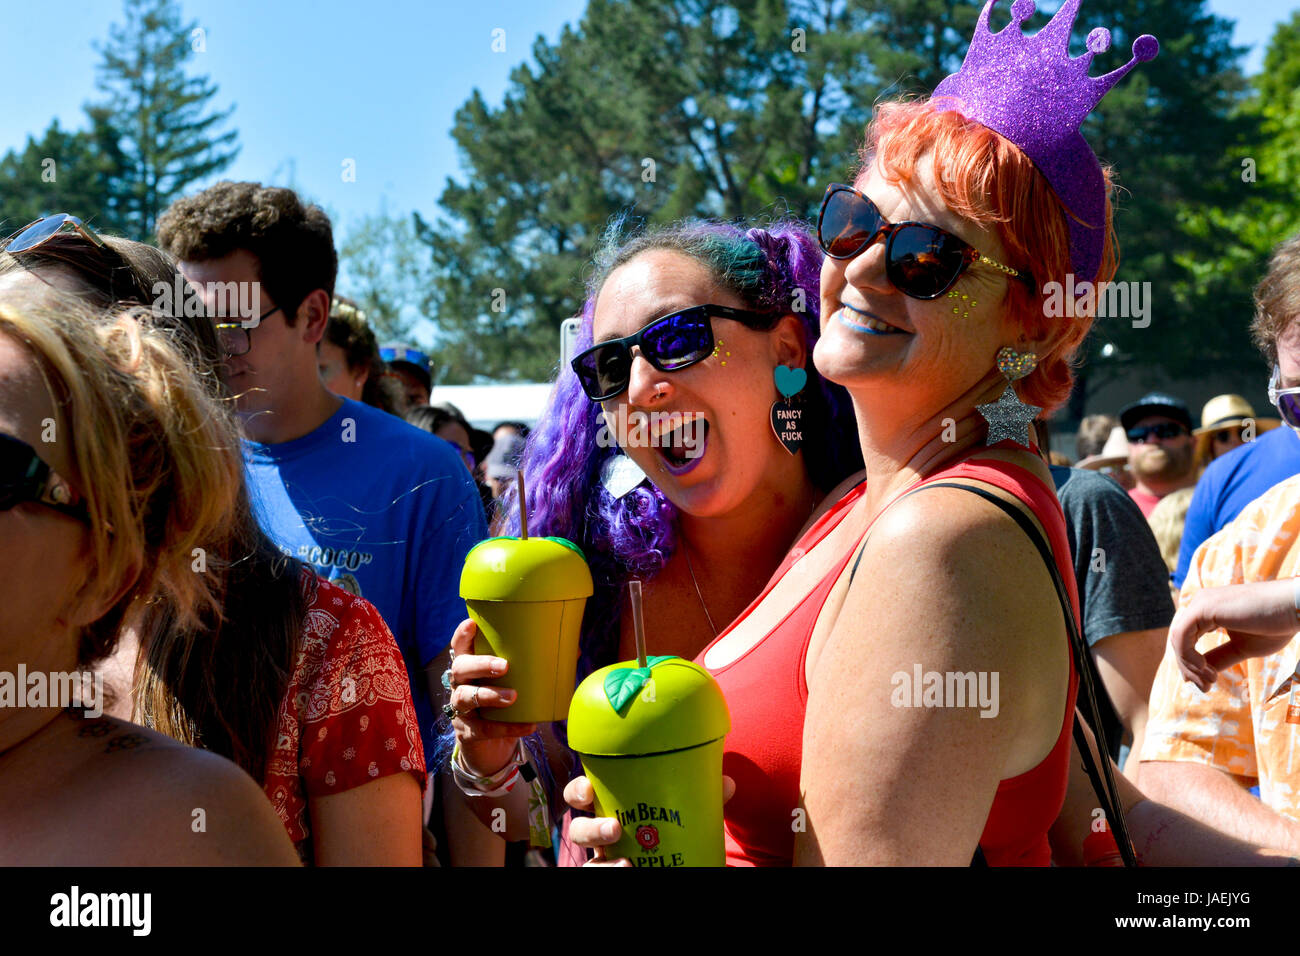 Napa, California, May 27, 2017 - Festival goers having fun at BottleRock - photo credit: Ken Howard/Alamy Stock Photo